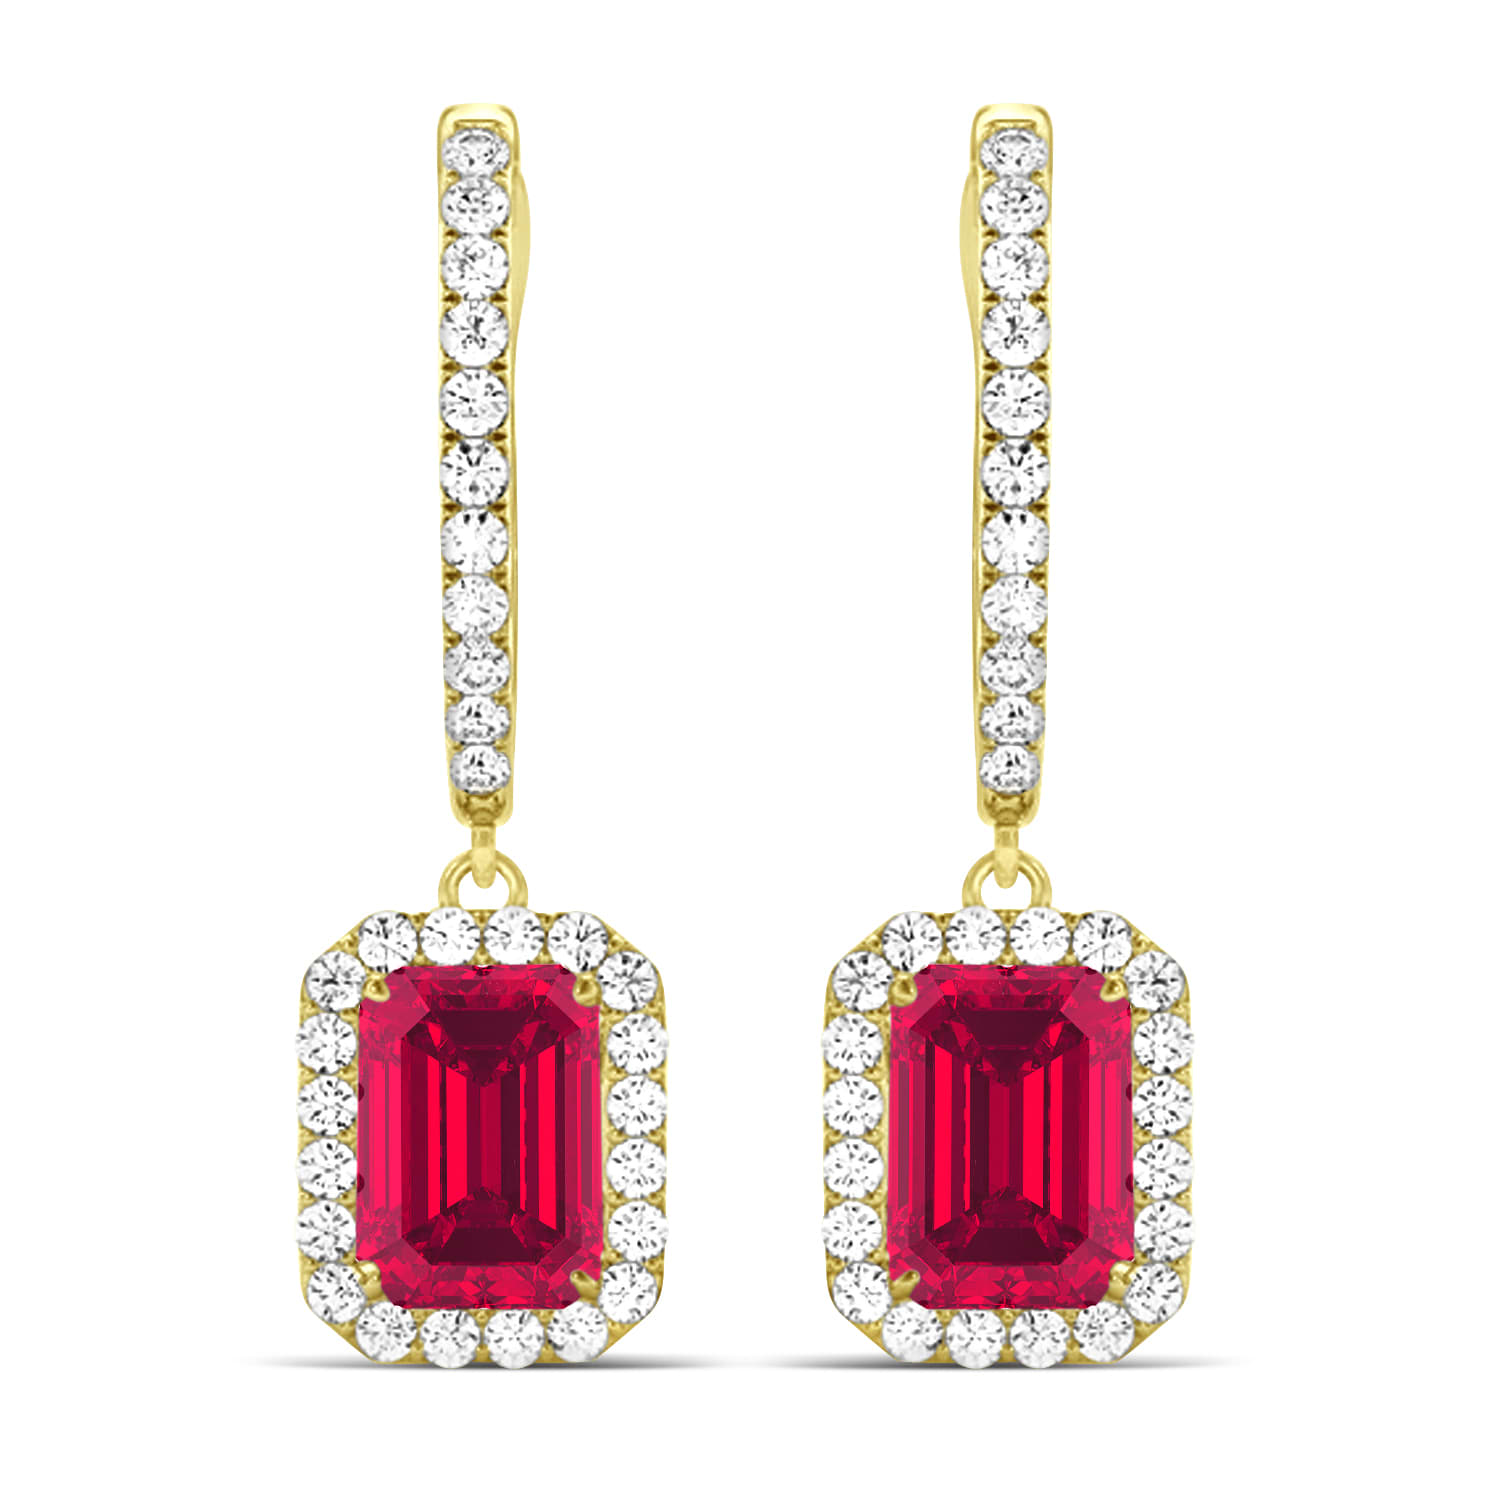 Emerald Shape Ruby & Diamond Halo Dangling Earrings 14k Yellow Gold (1.90ct)